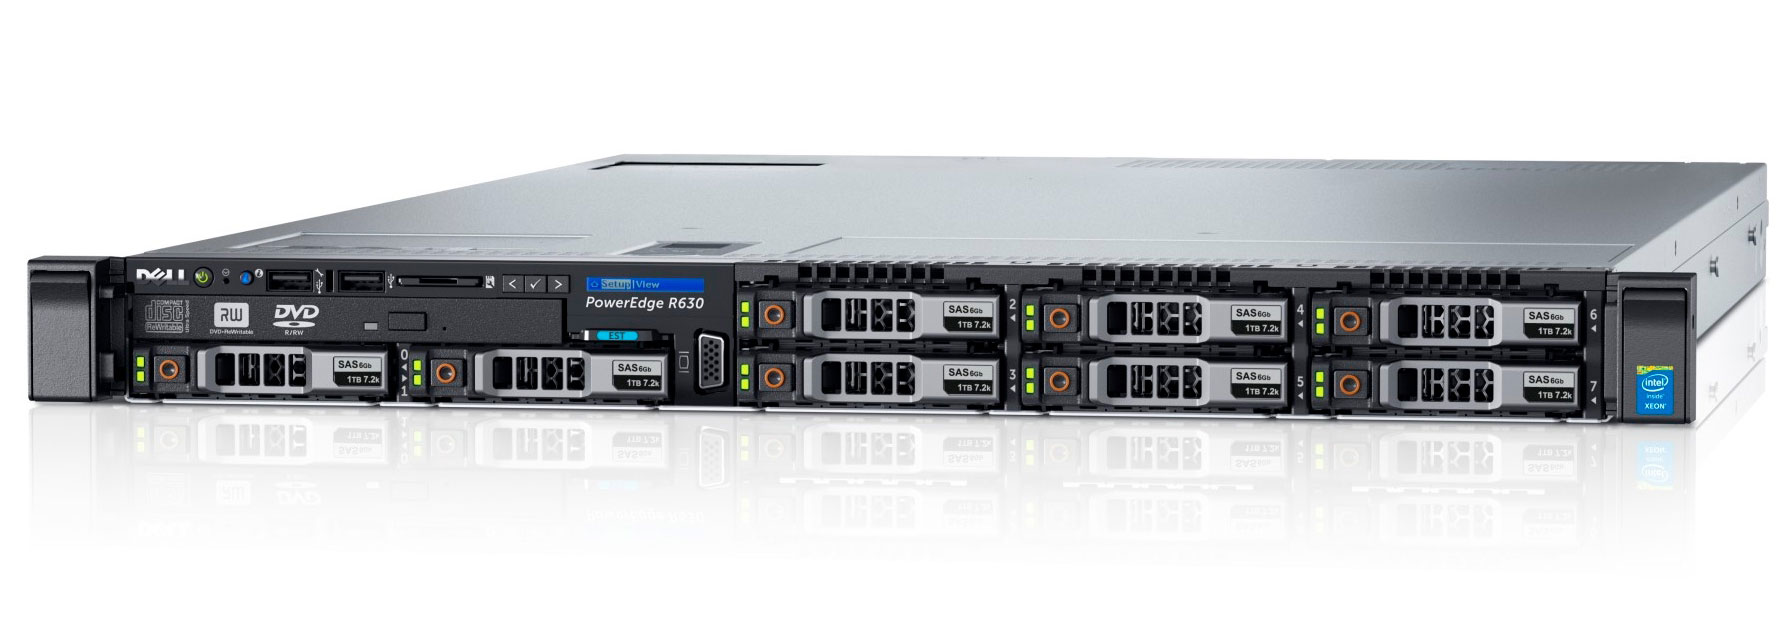 Подробное фото Сервер DELL PowerEdge R630 Xeon 2x E5-2690v3 192Gb DDR4 2133P 8x noHDD 2.5", SAS RAID Perc H730 mini, 1024Mb, DVD, 2*PSU